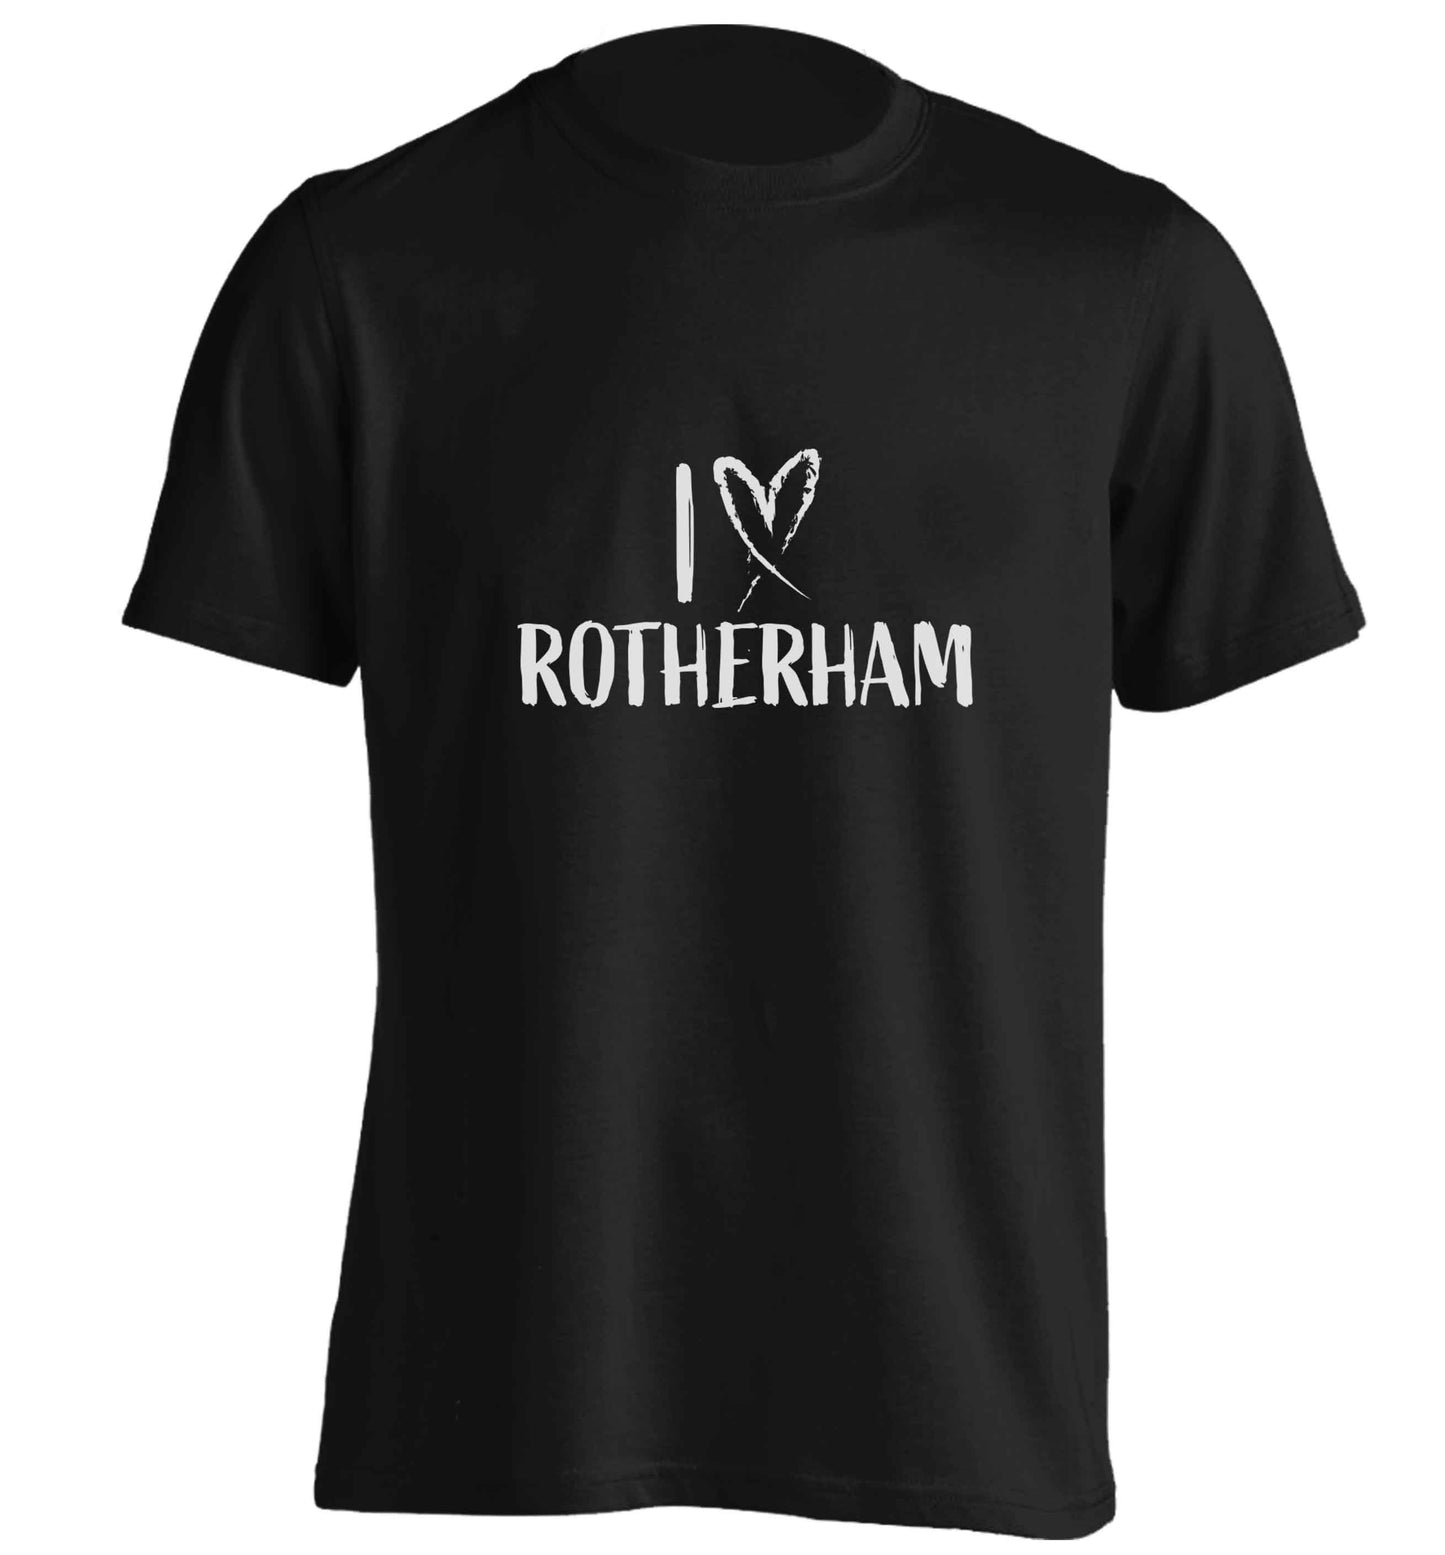 I love Rotherham adults unisex black Tshirt 2XL